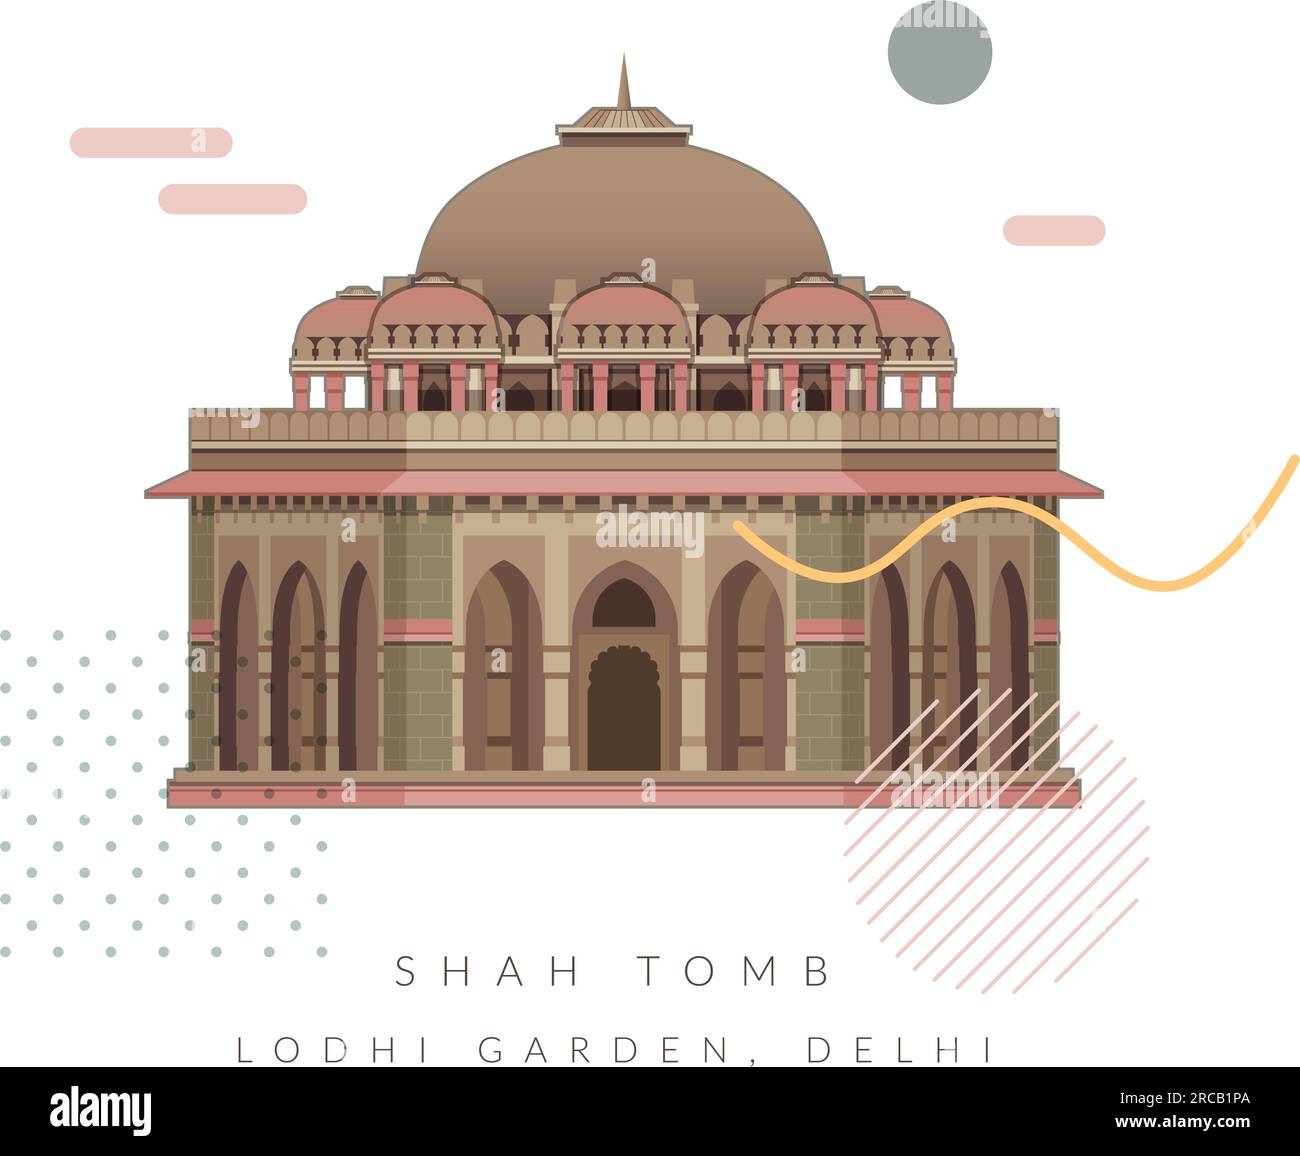 Muhammad Shah Tomb in Lodhi Gardens - Delhi - Icon Illustration as EPS 10 File Stock Vector